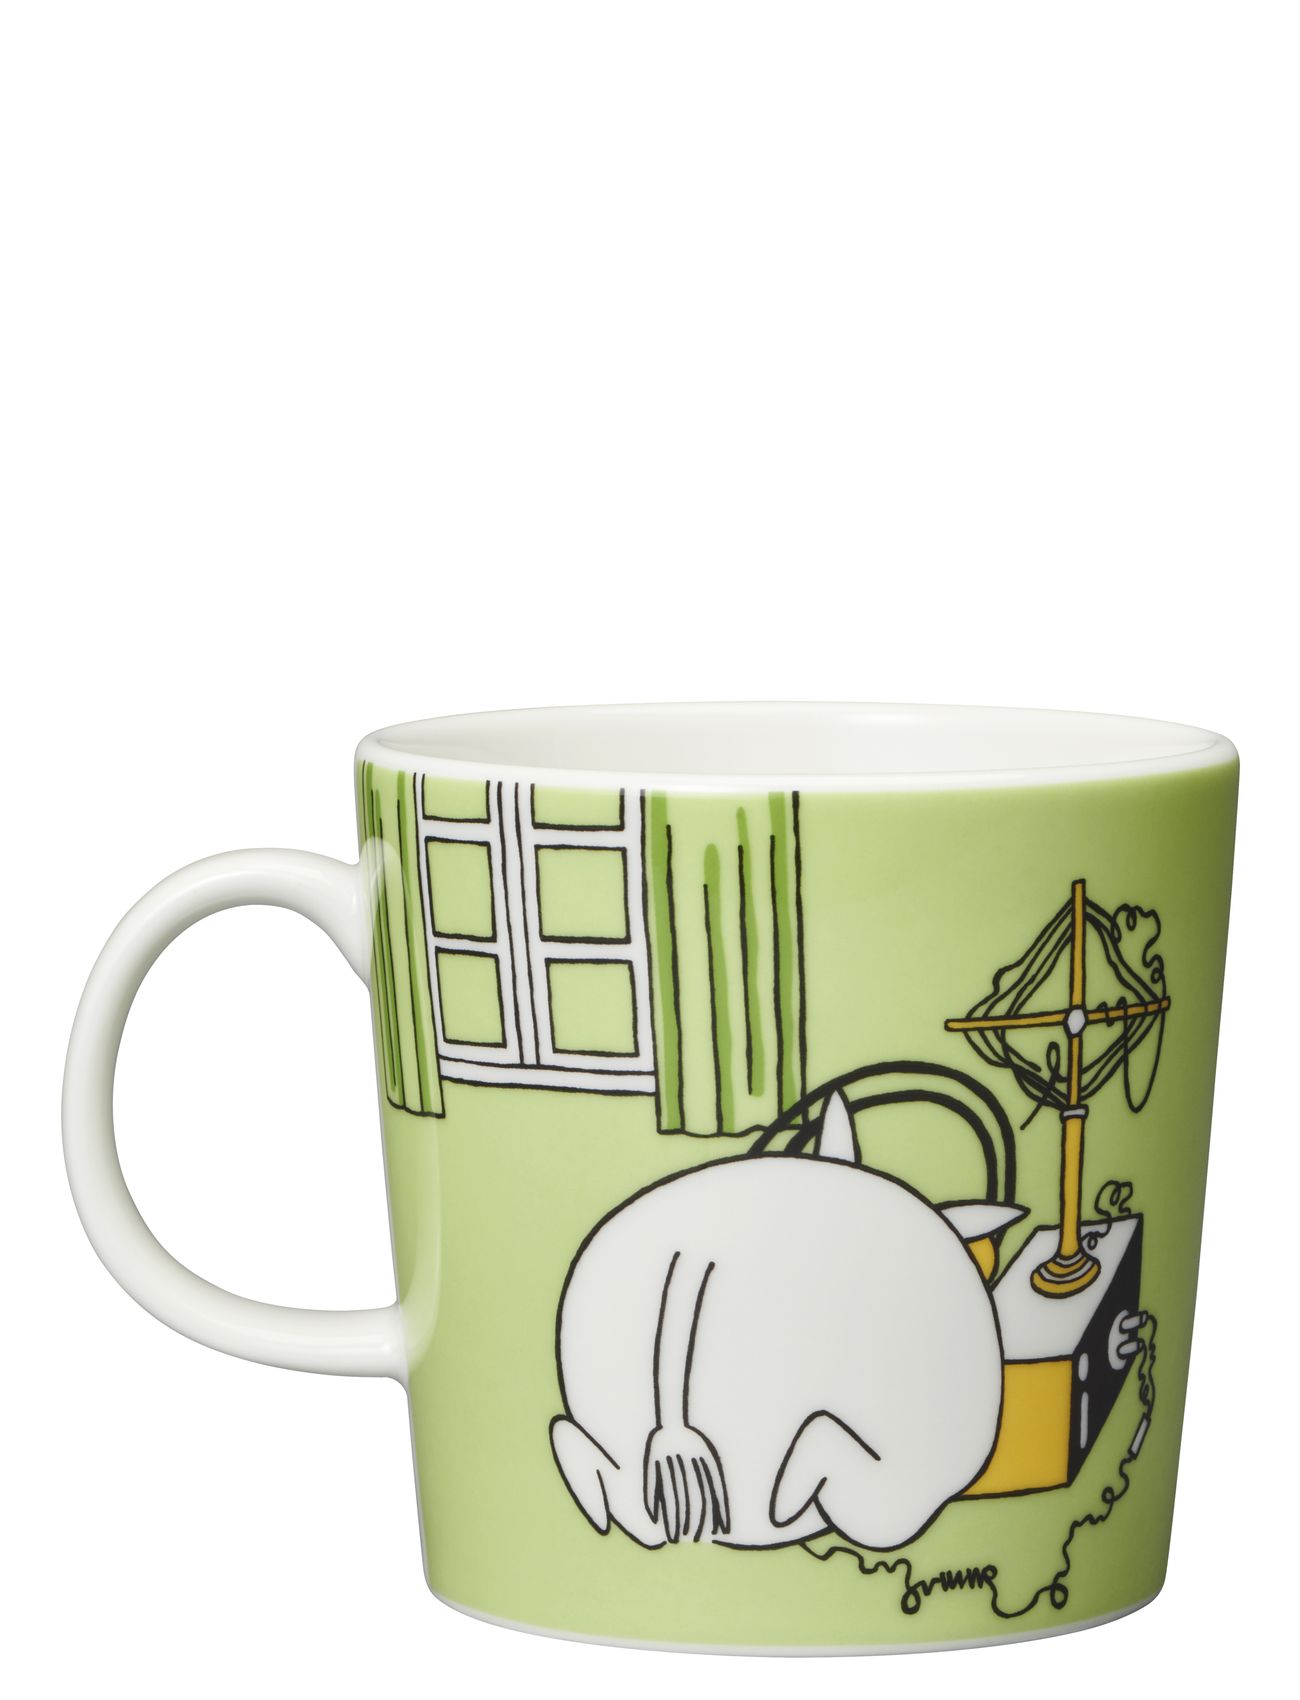 Moomin Mug 0,3L Moomintroll Home Tableware Cups & Mugs Coffee Cups Green Arabia